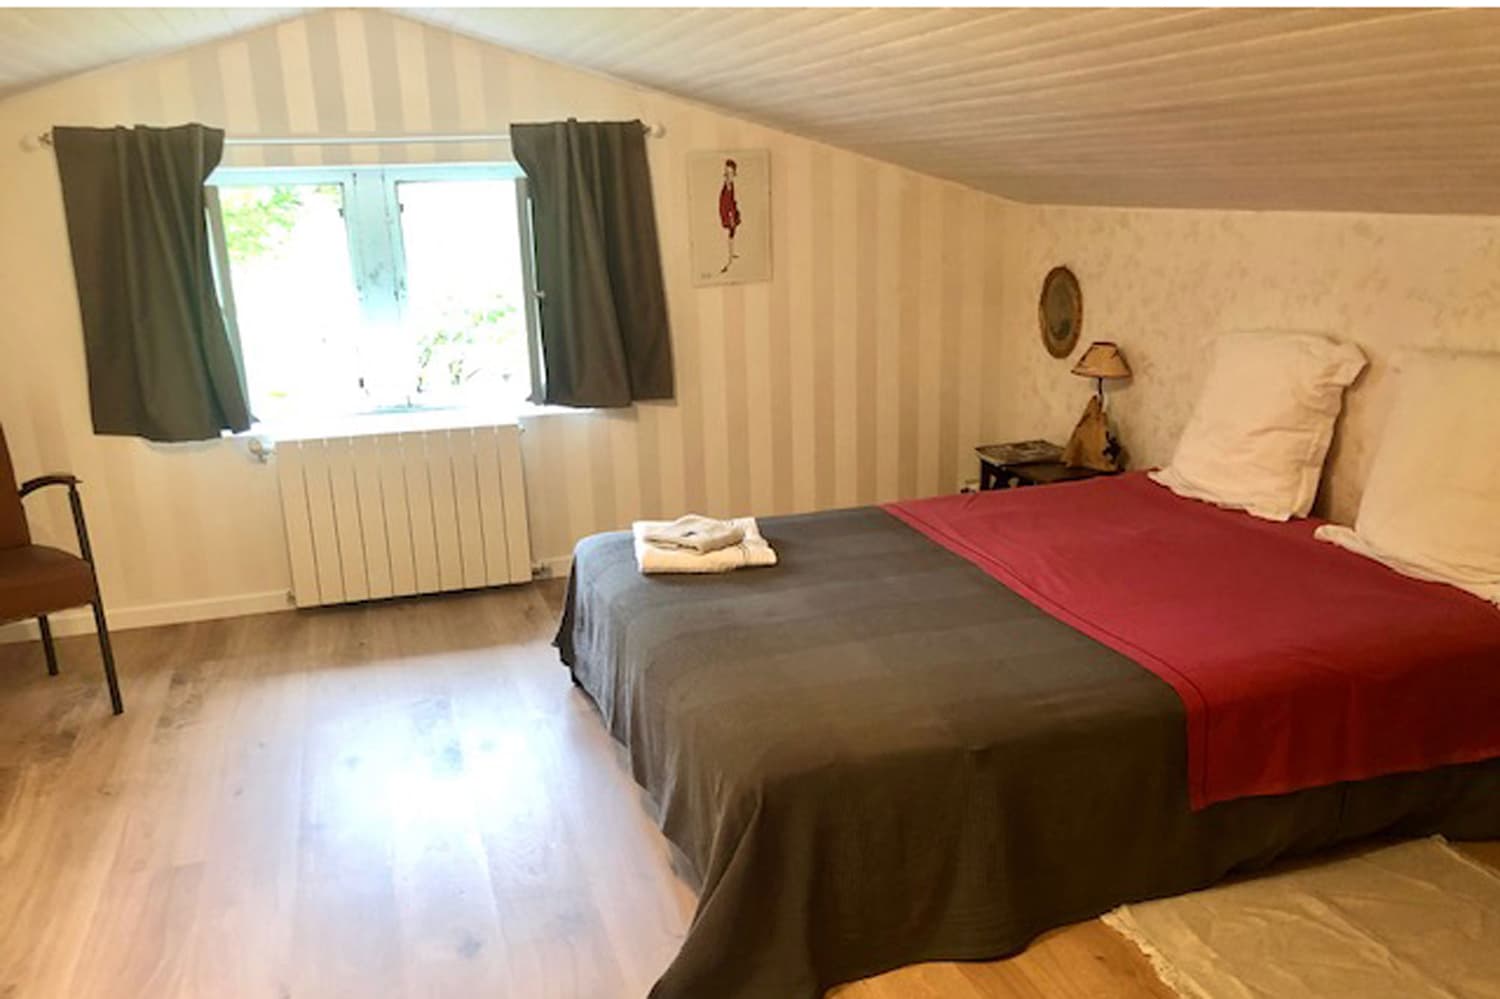 Bedroom in South West France rental home